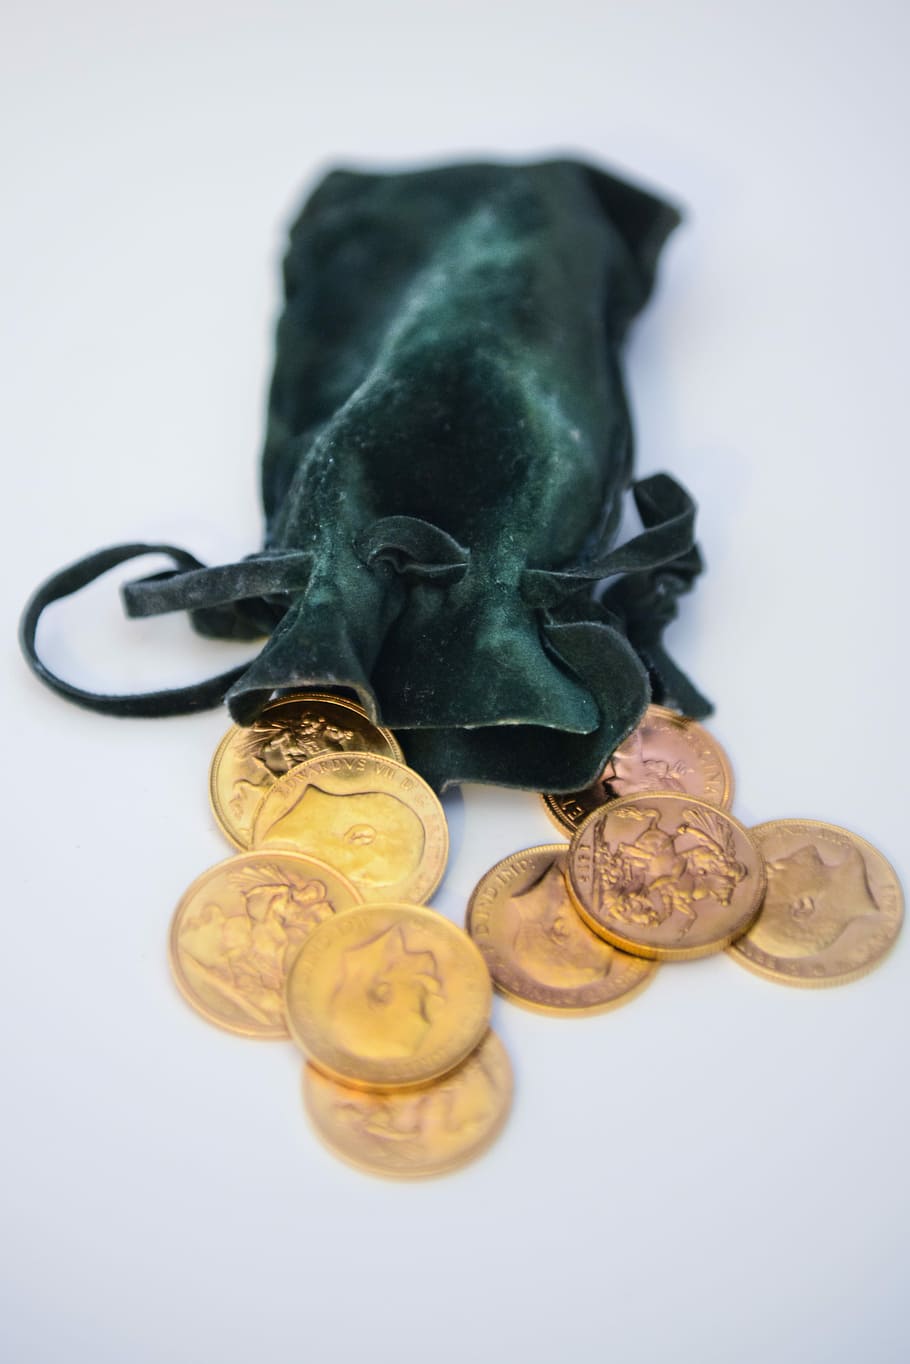 Gold, Coins, Money, Prosperity, white background, studio shot